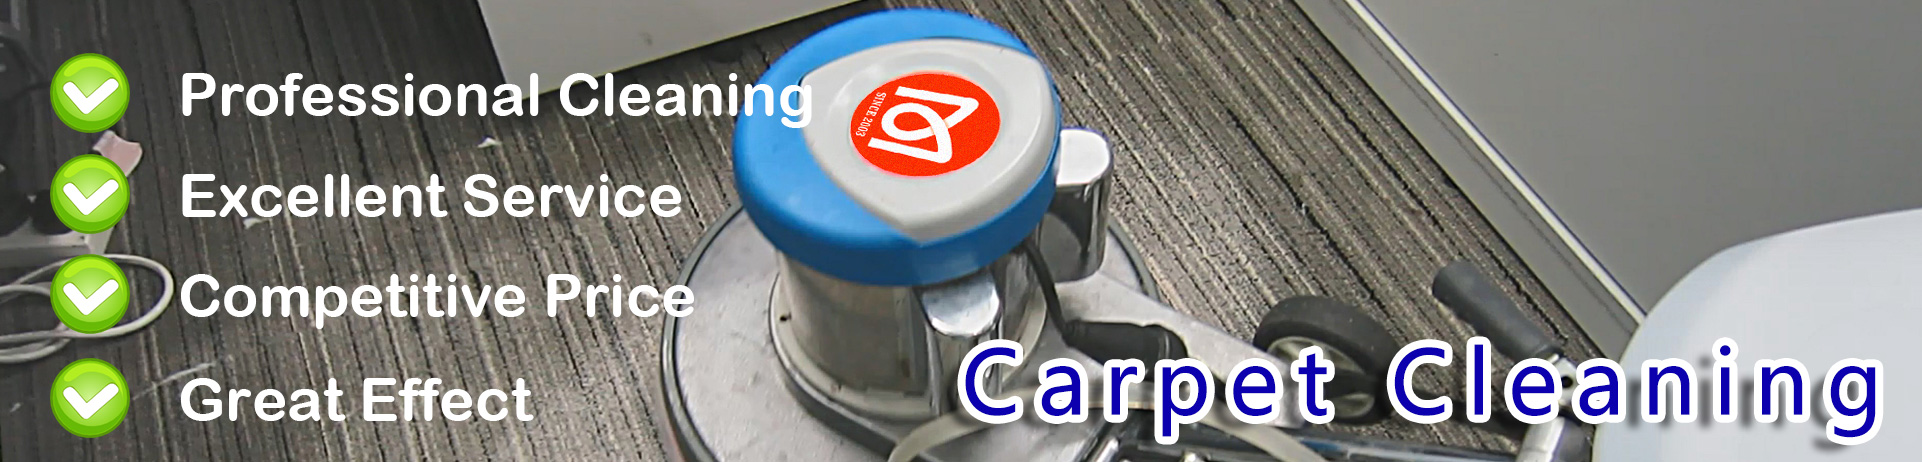 CarpetCleaning_Header_R1-en